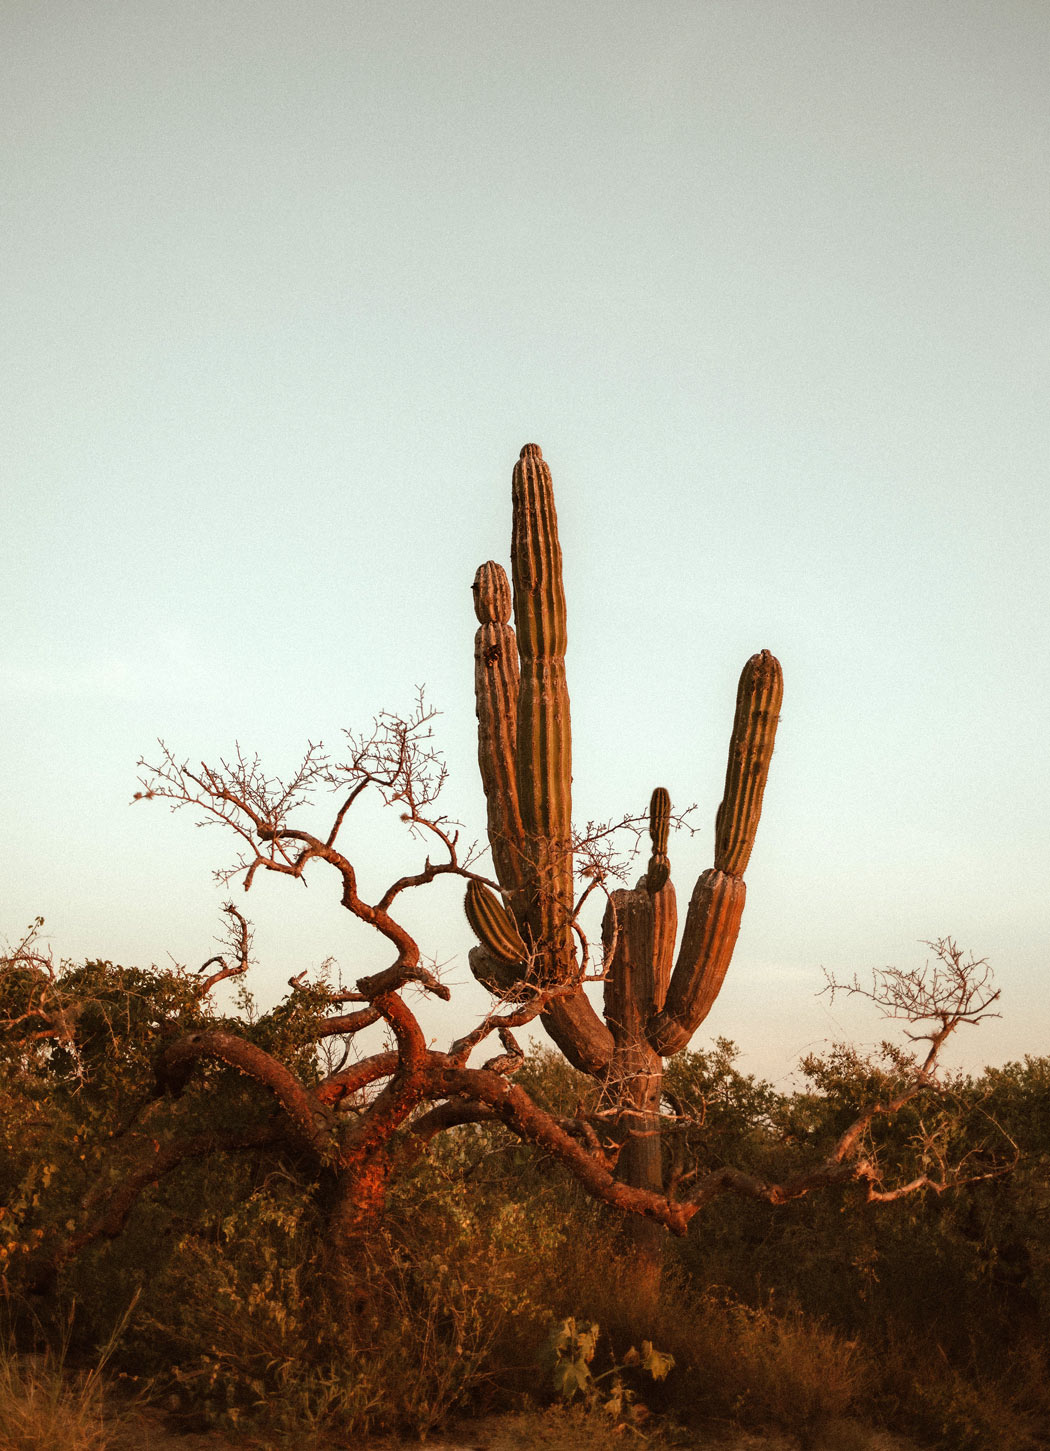 Cactus in the Baja desert